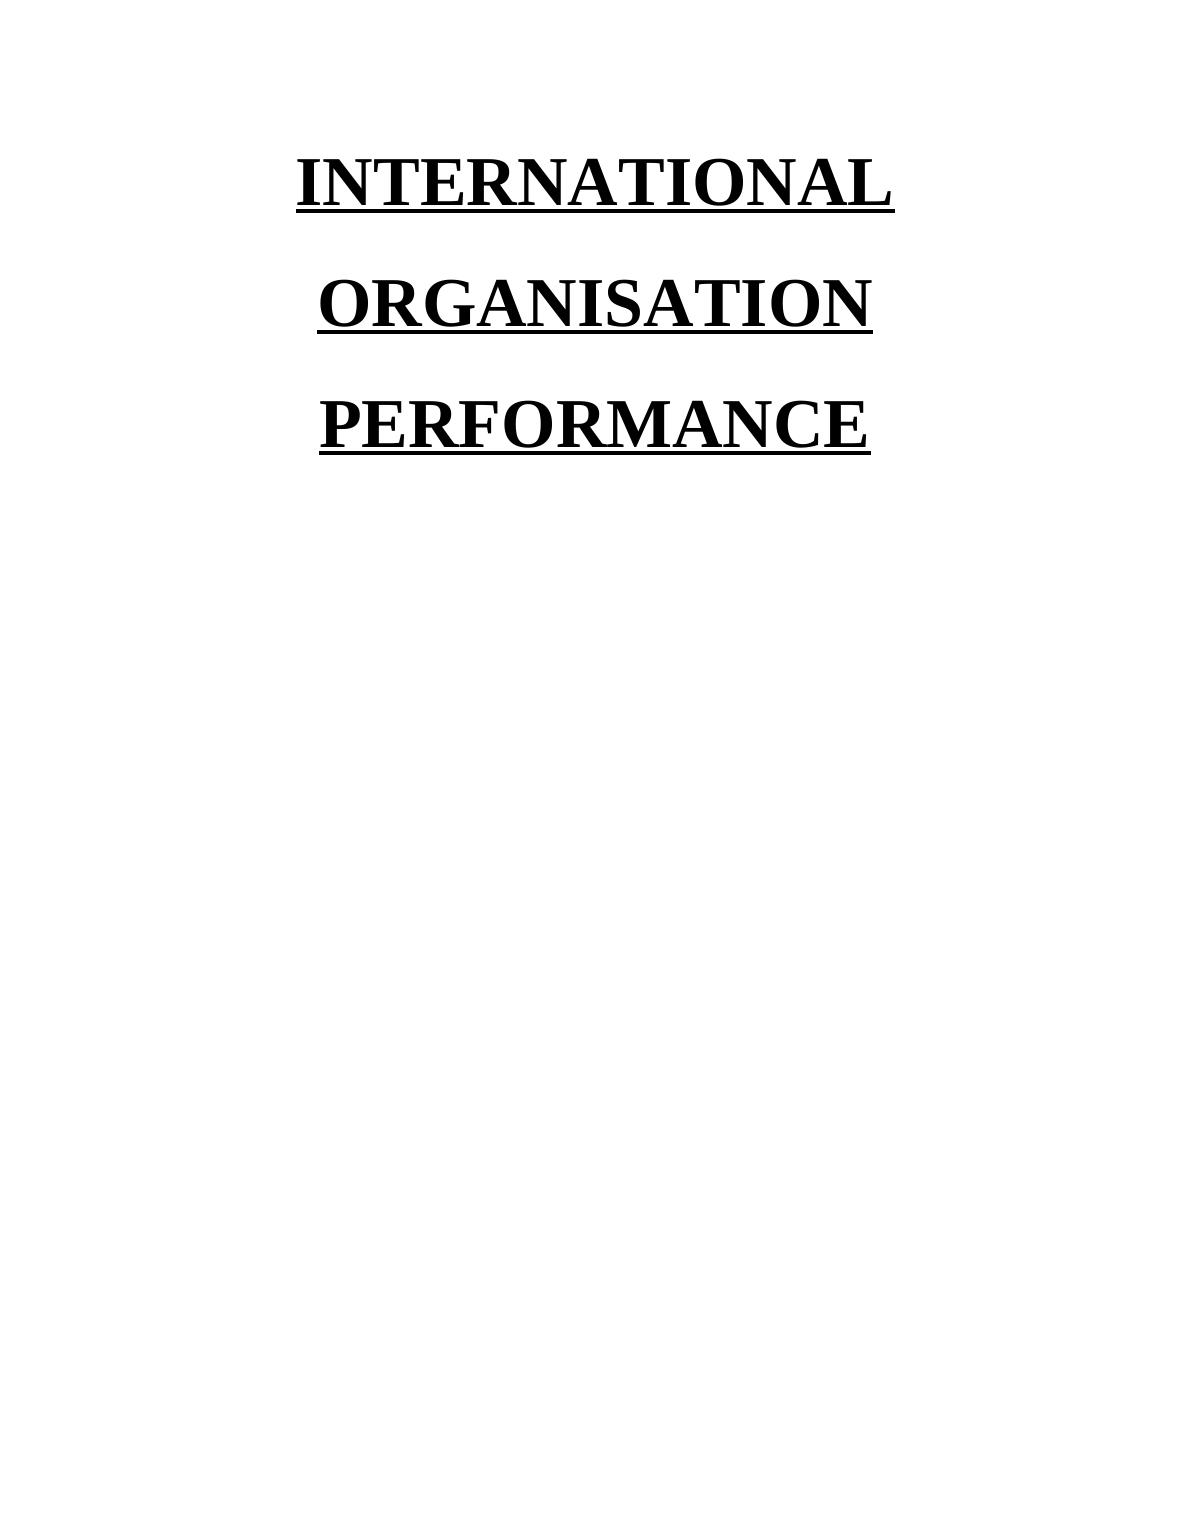 The Performance of International Organizations_1